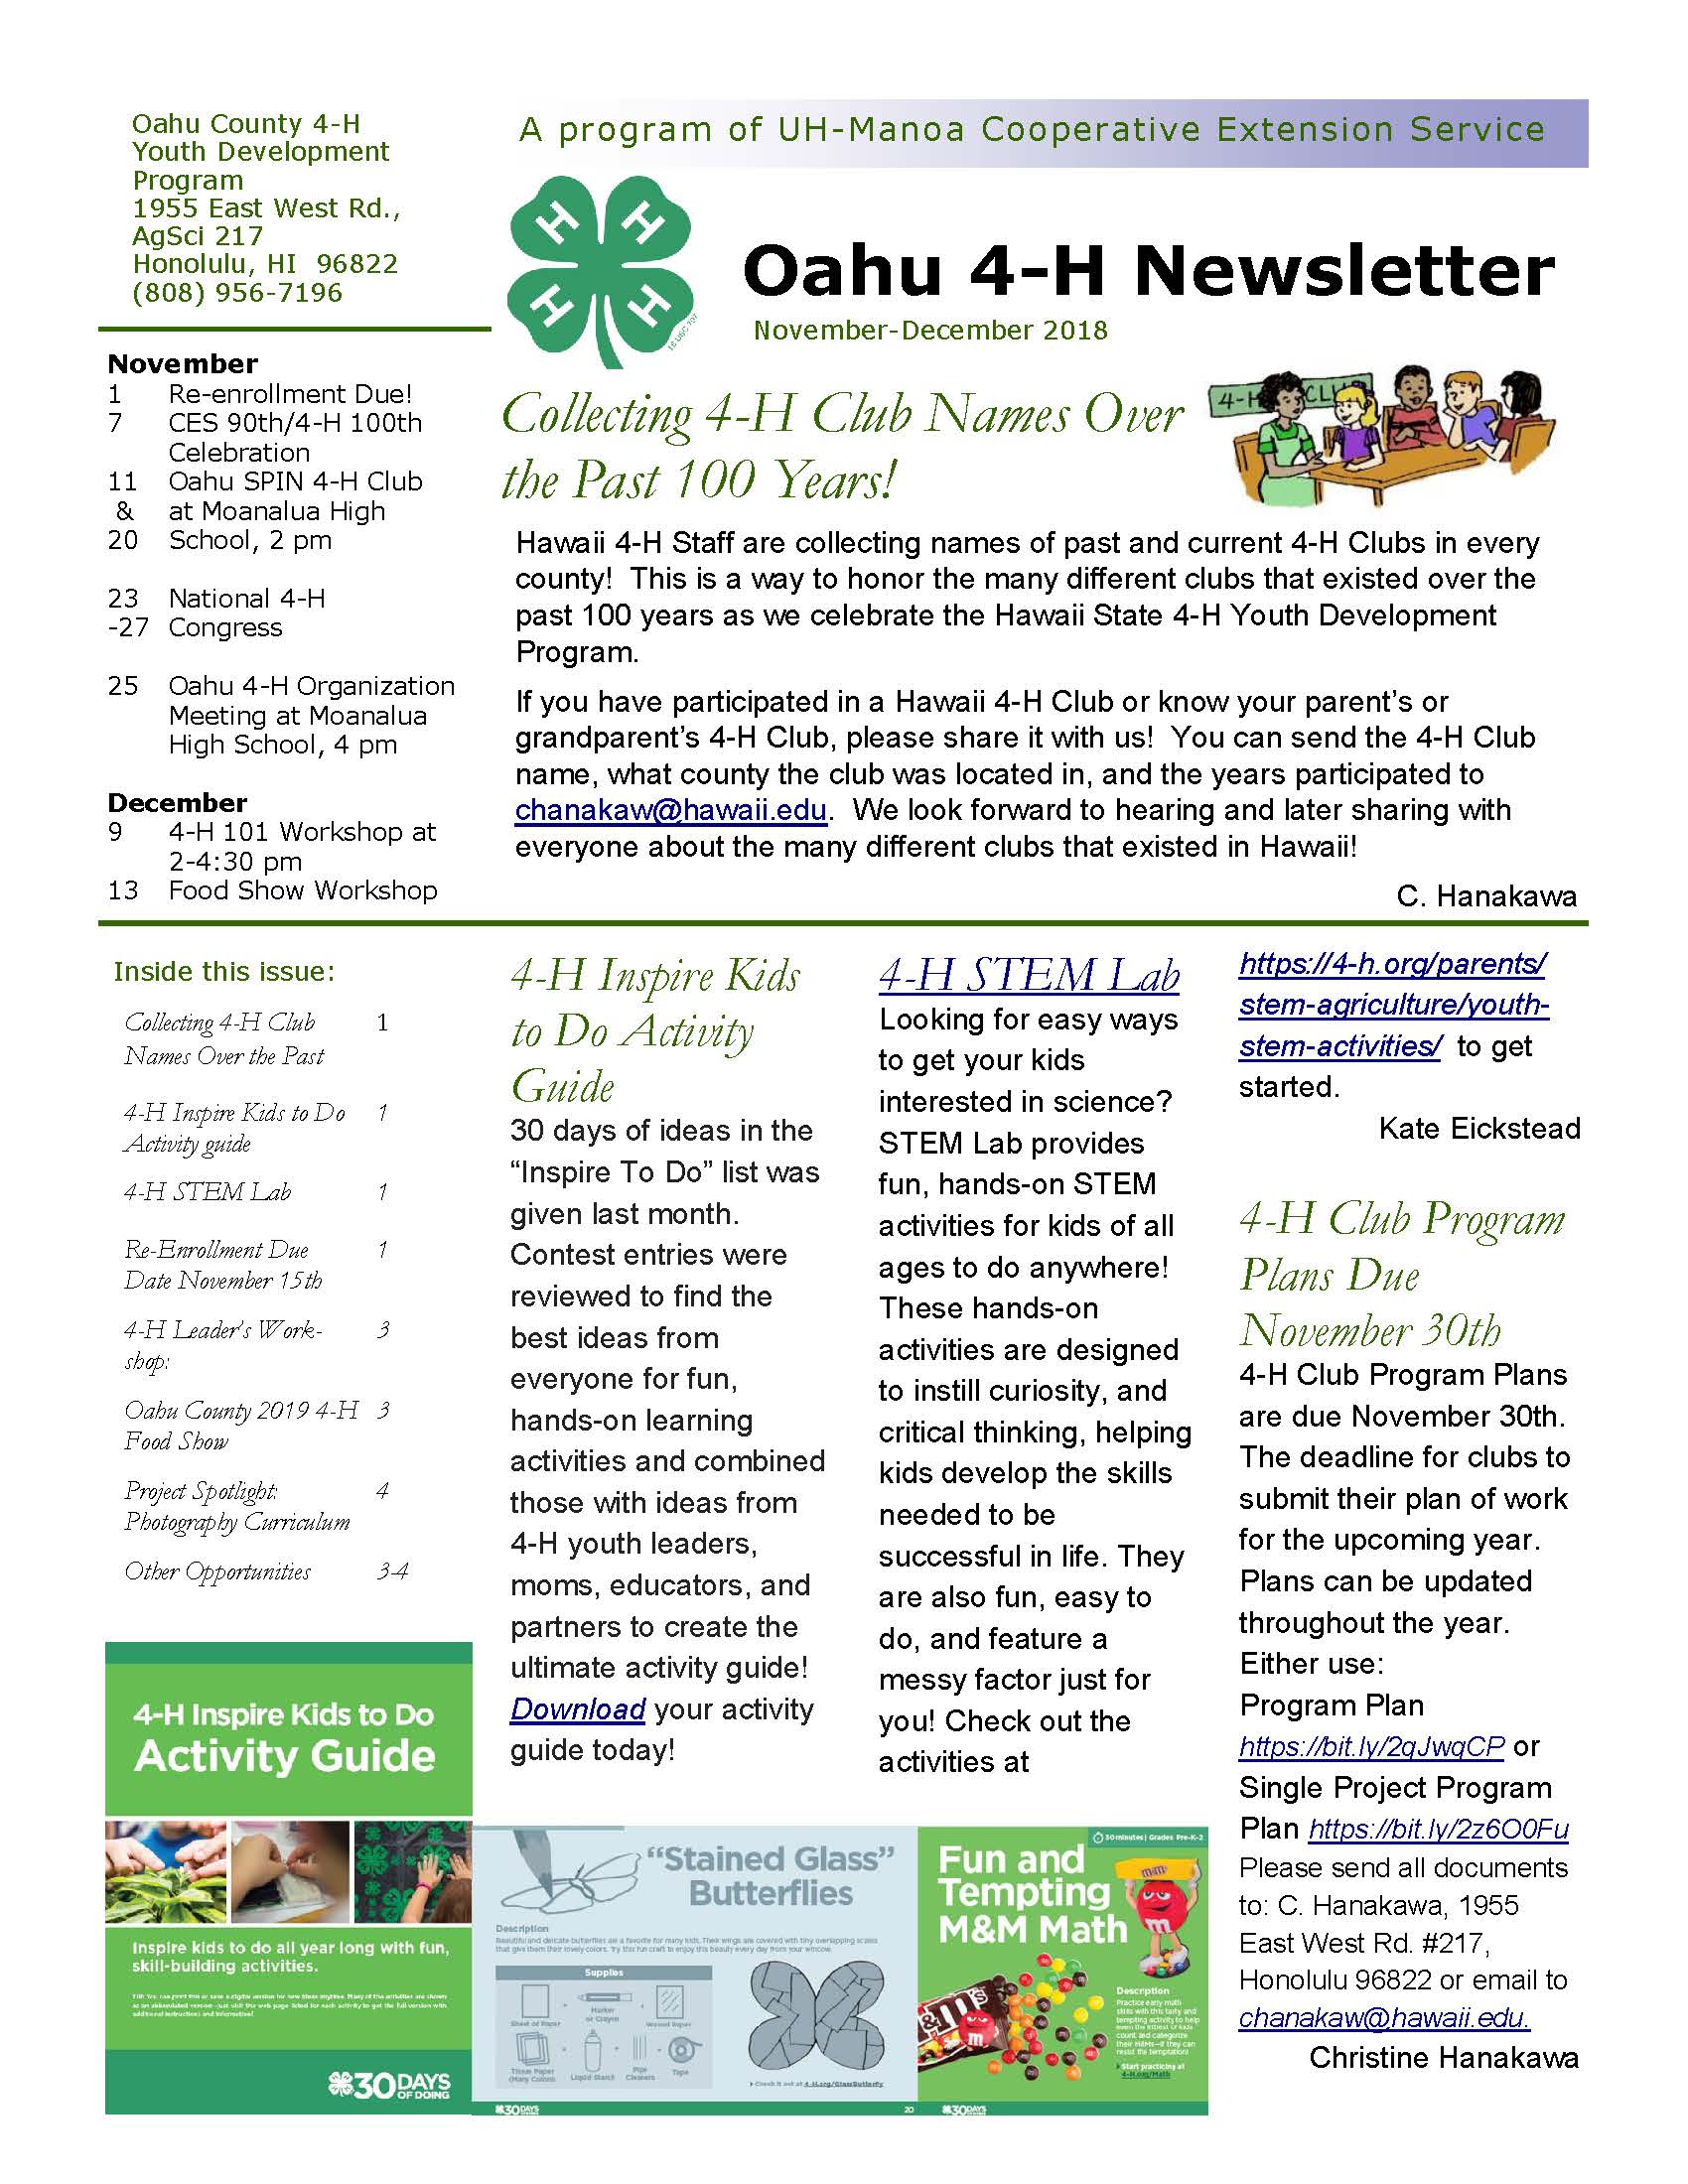 Oahu 4-H November 2018 Newsletter – Hawaii State 4-H Program1700 x 2200